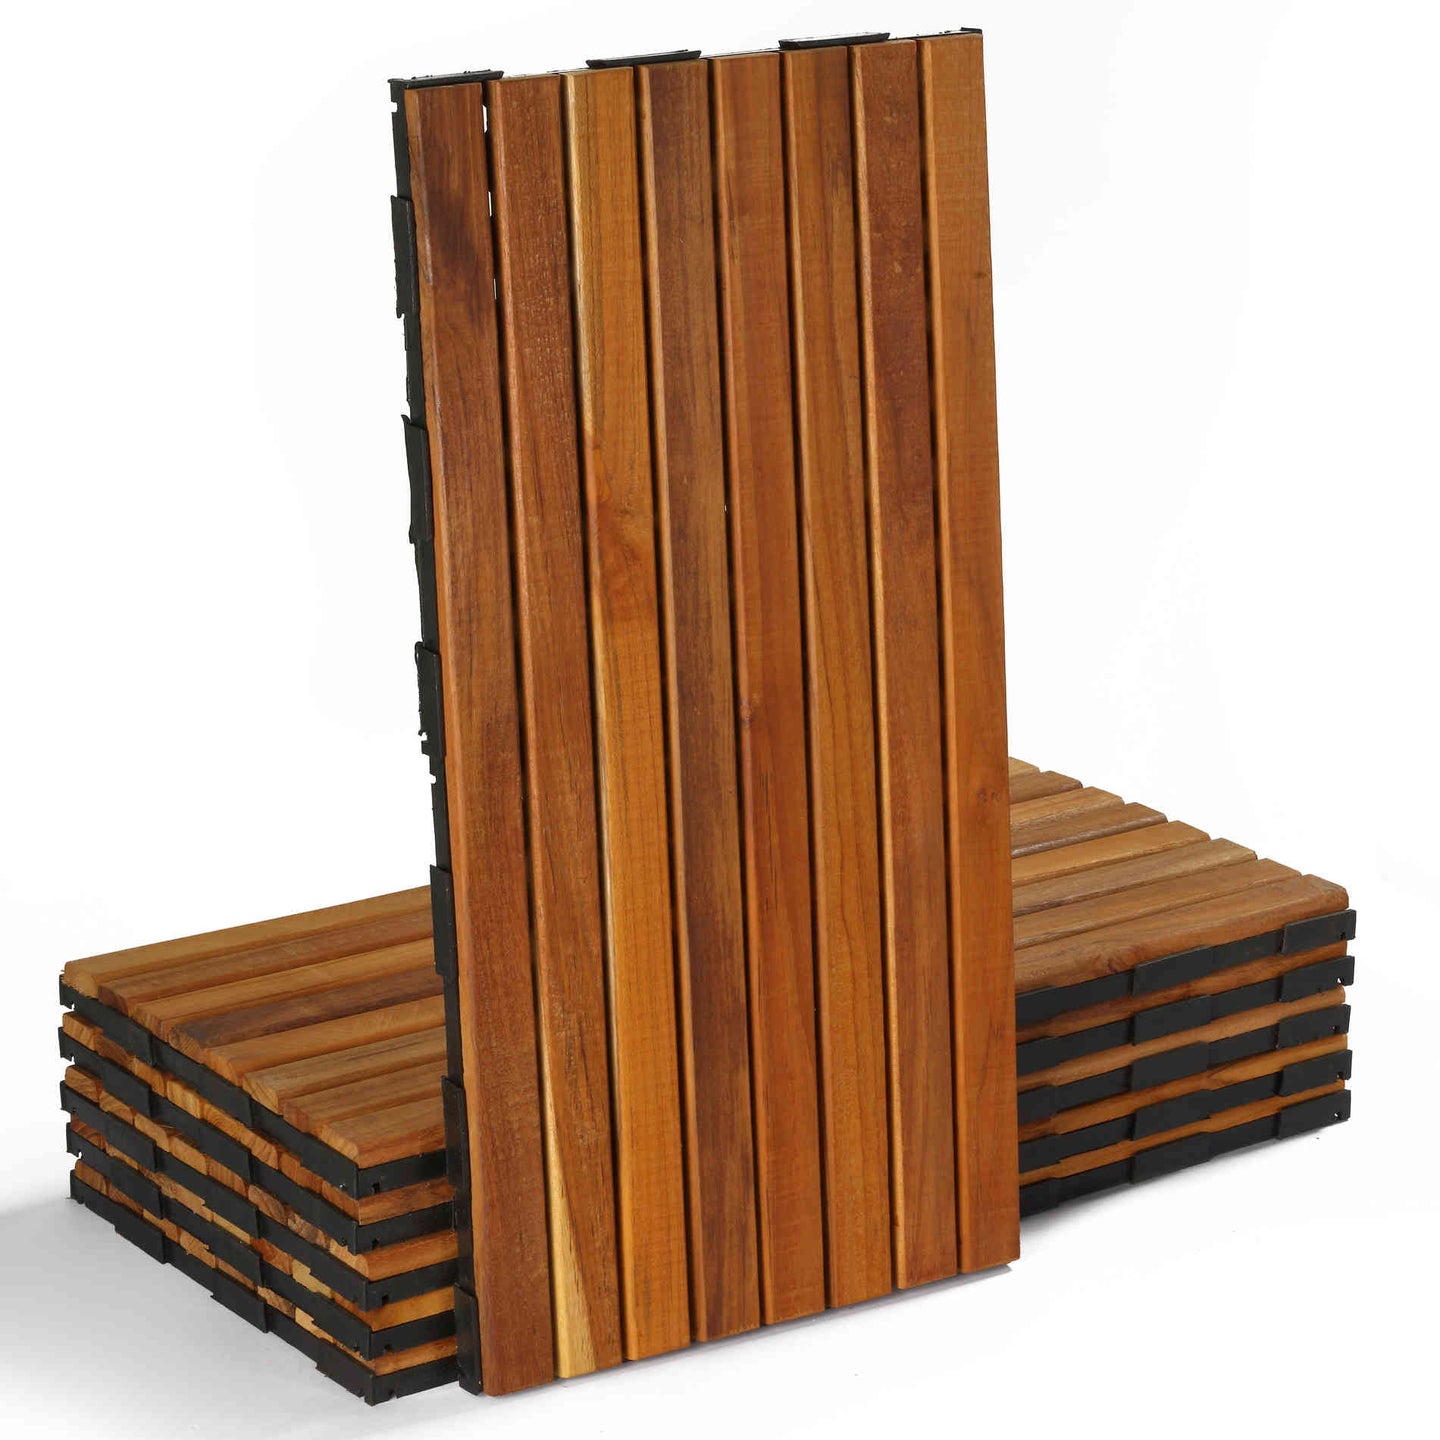 Cortesi Home DIY Interlocking Floor Tiles in Solid Teak Wood (Set of 6) 12x24 each panel, 12 sq ft